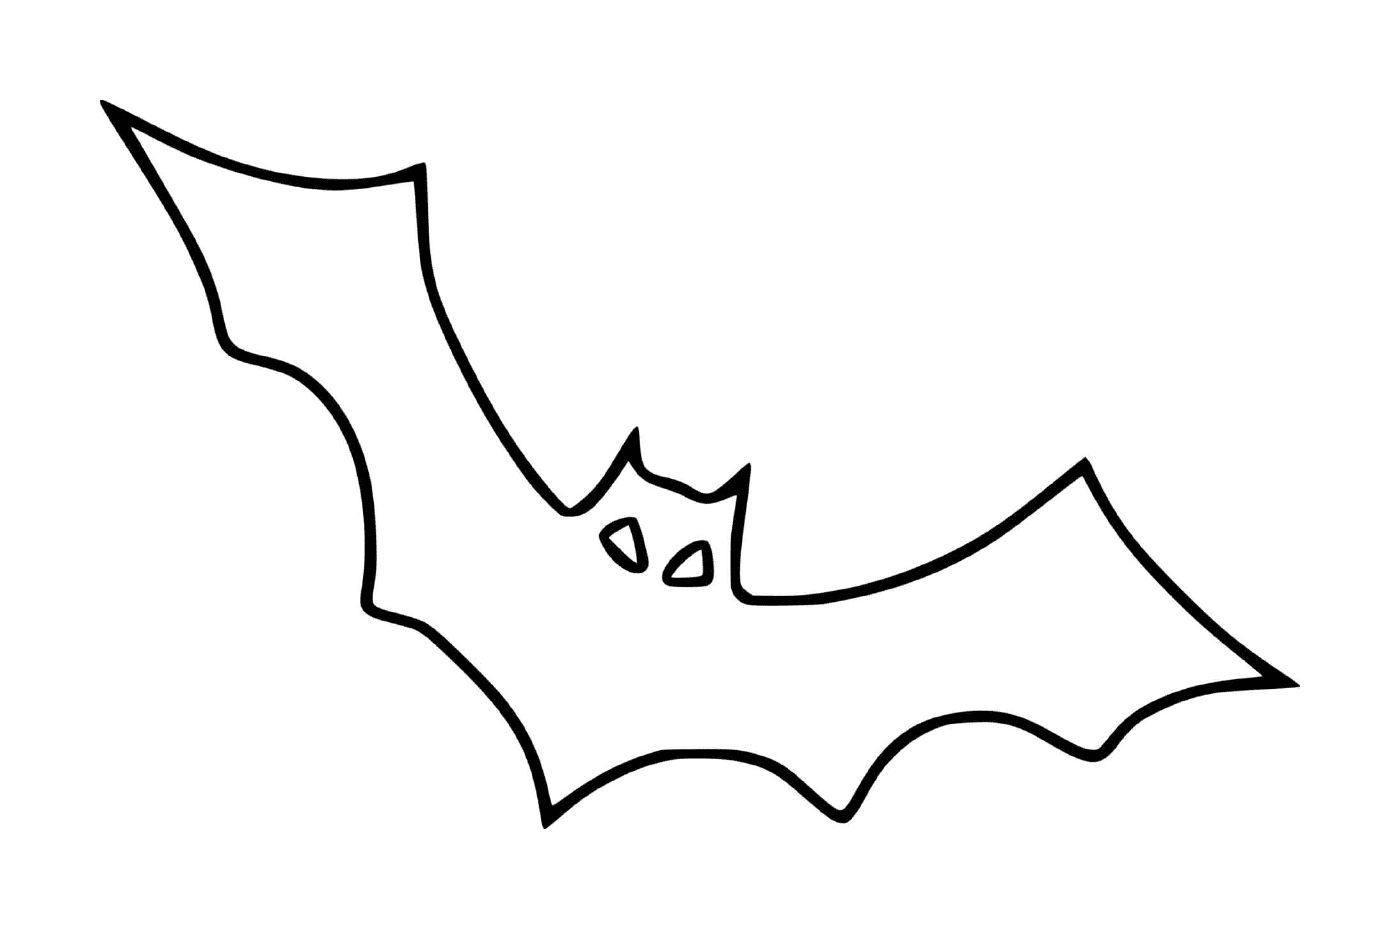  Batman bat 